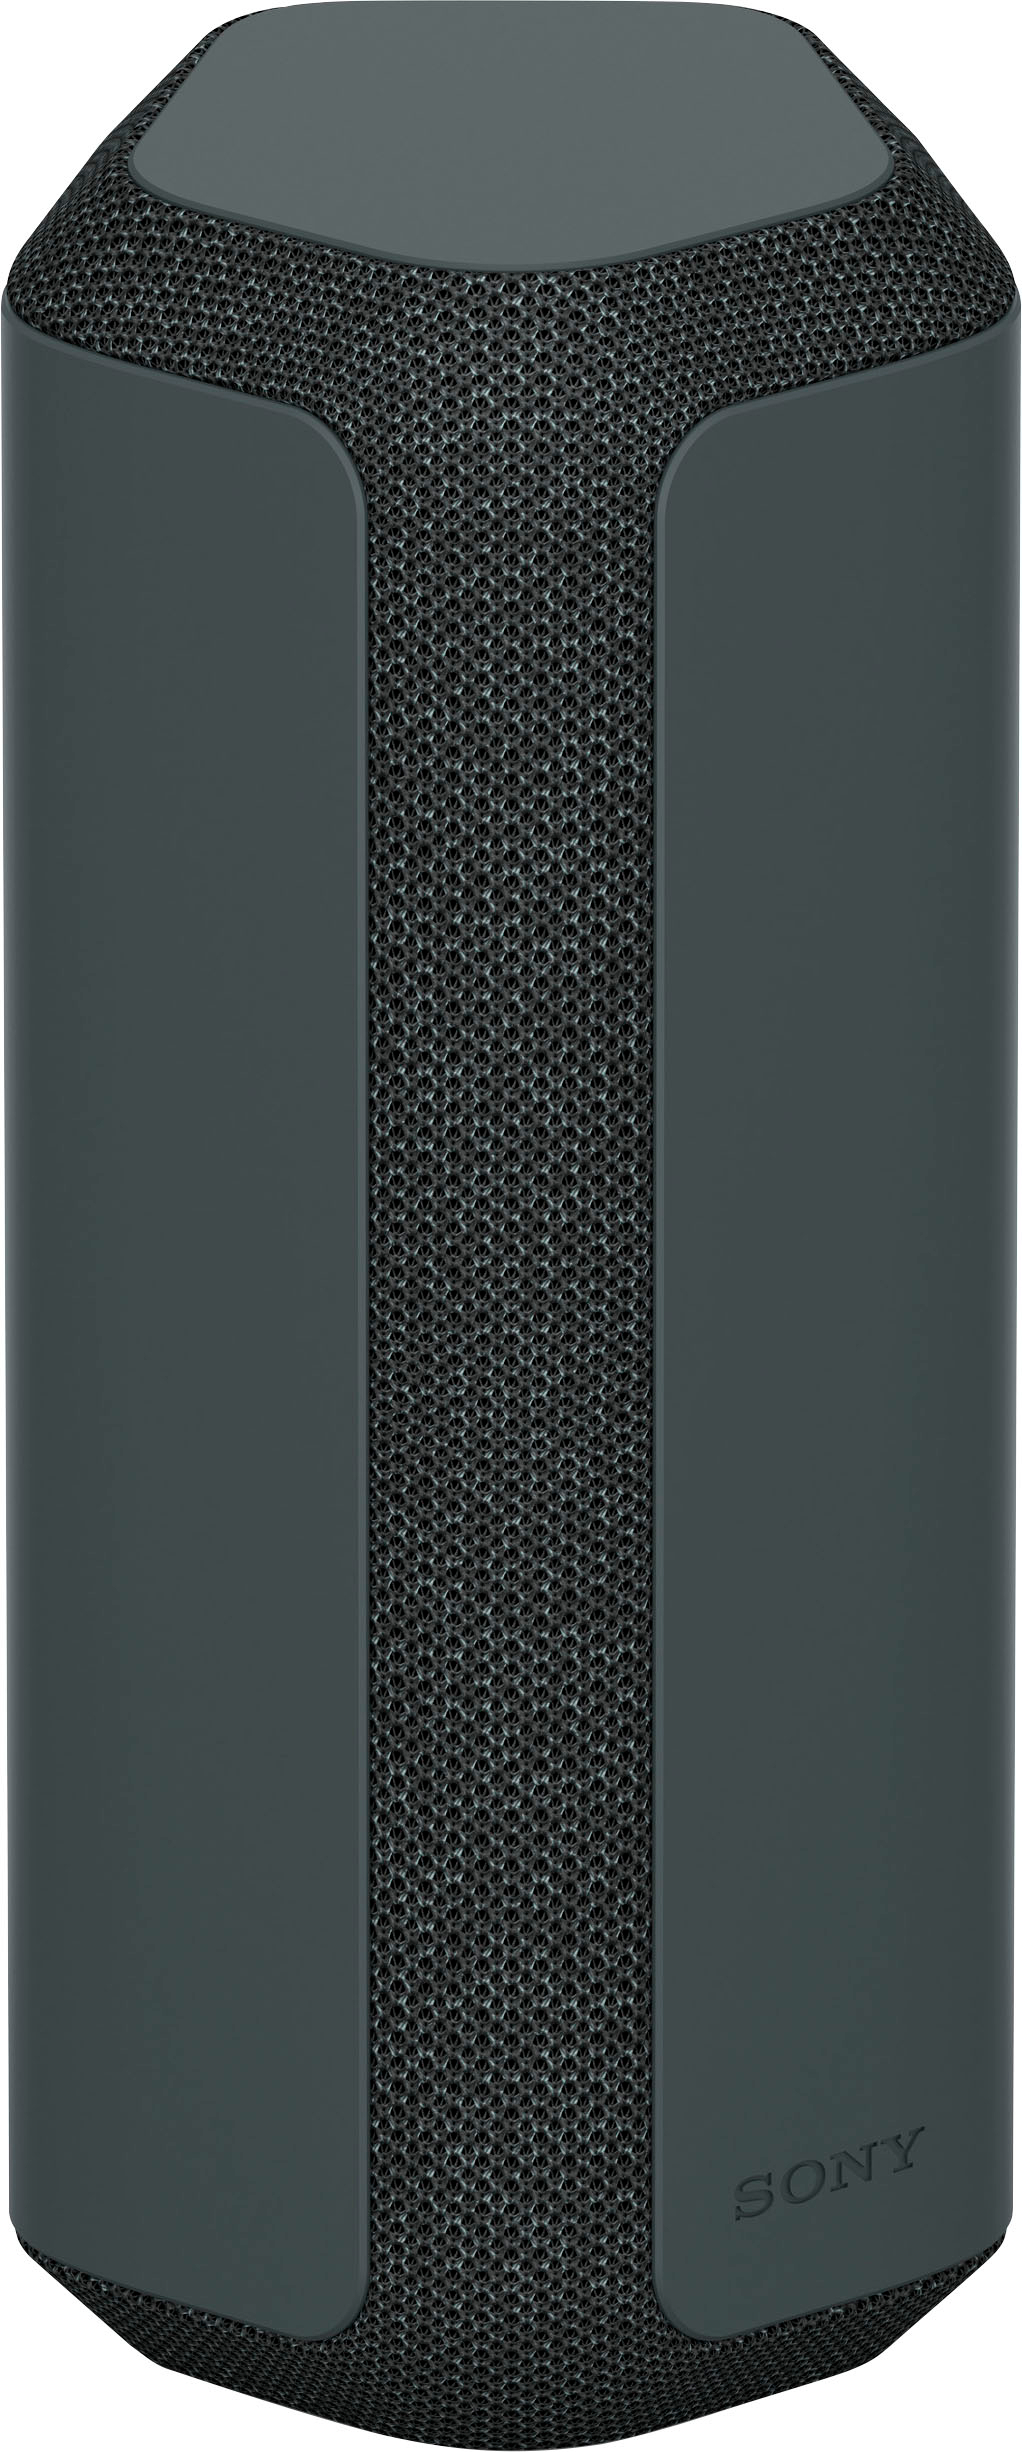 Sony XE300 Portable Waterproof and Dustproof Bluetooth Speaker Black  SRSXE300/B - Best Buy